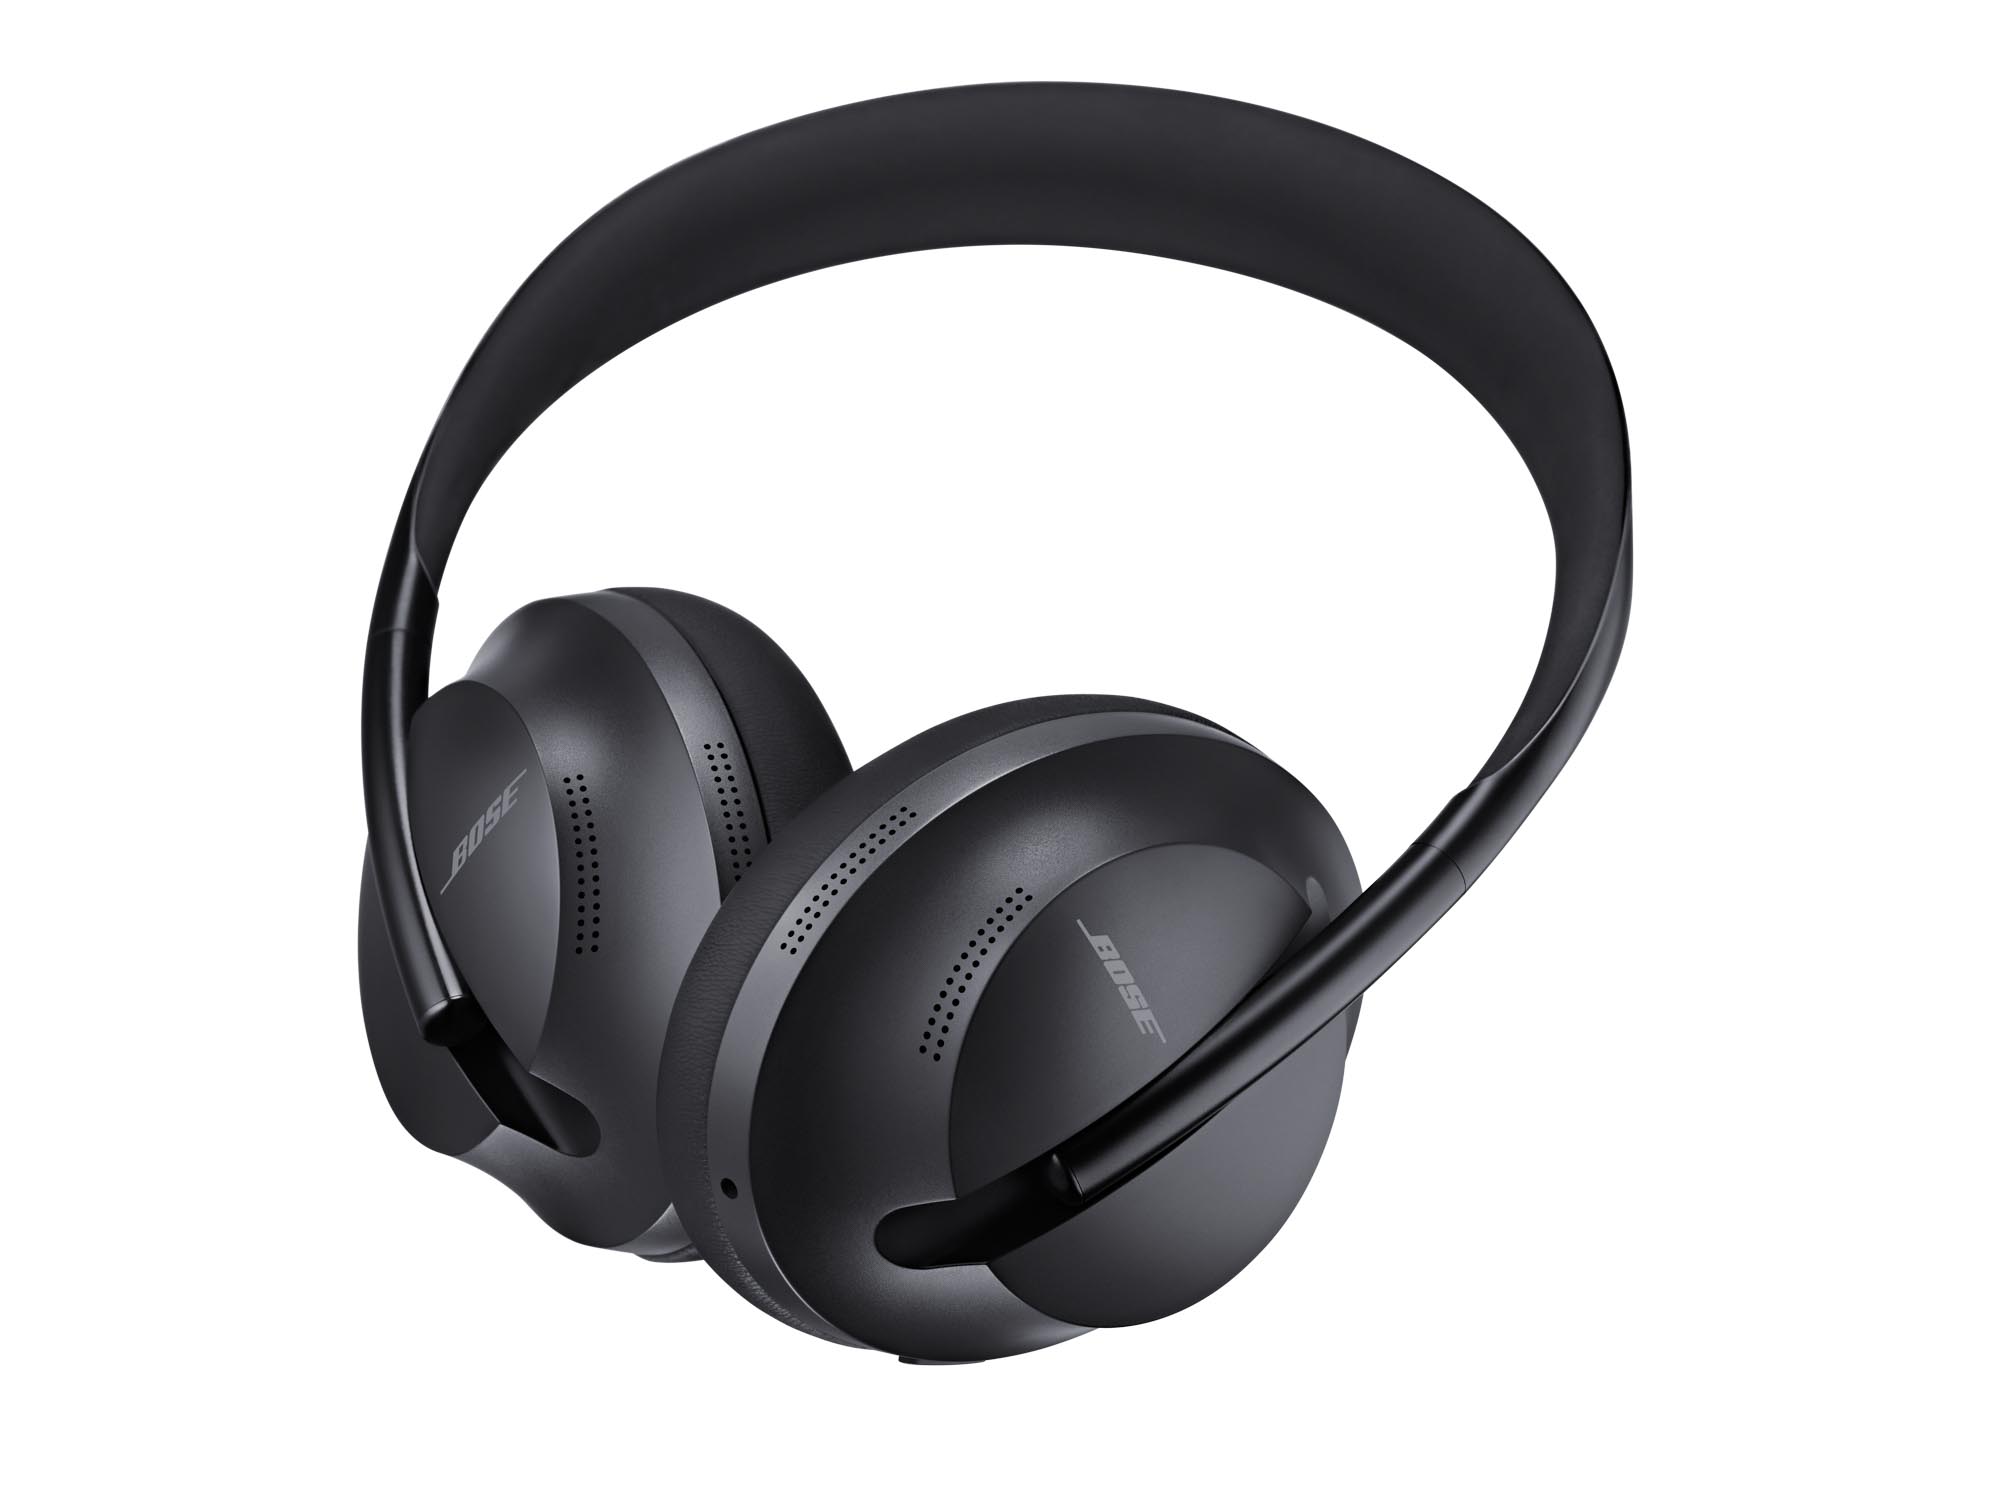 Bose Noise Cancelling Headphones 700 over-ear Wireless Bluetooth Earphones, Black - image 7 of 10